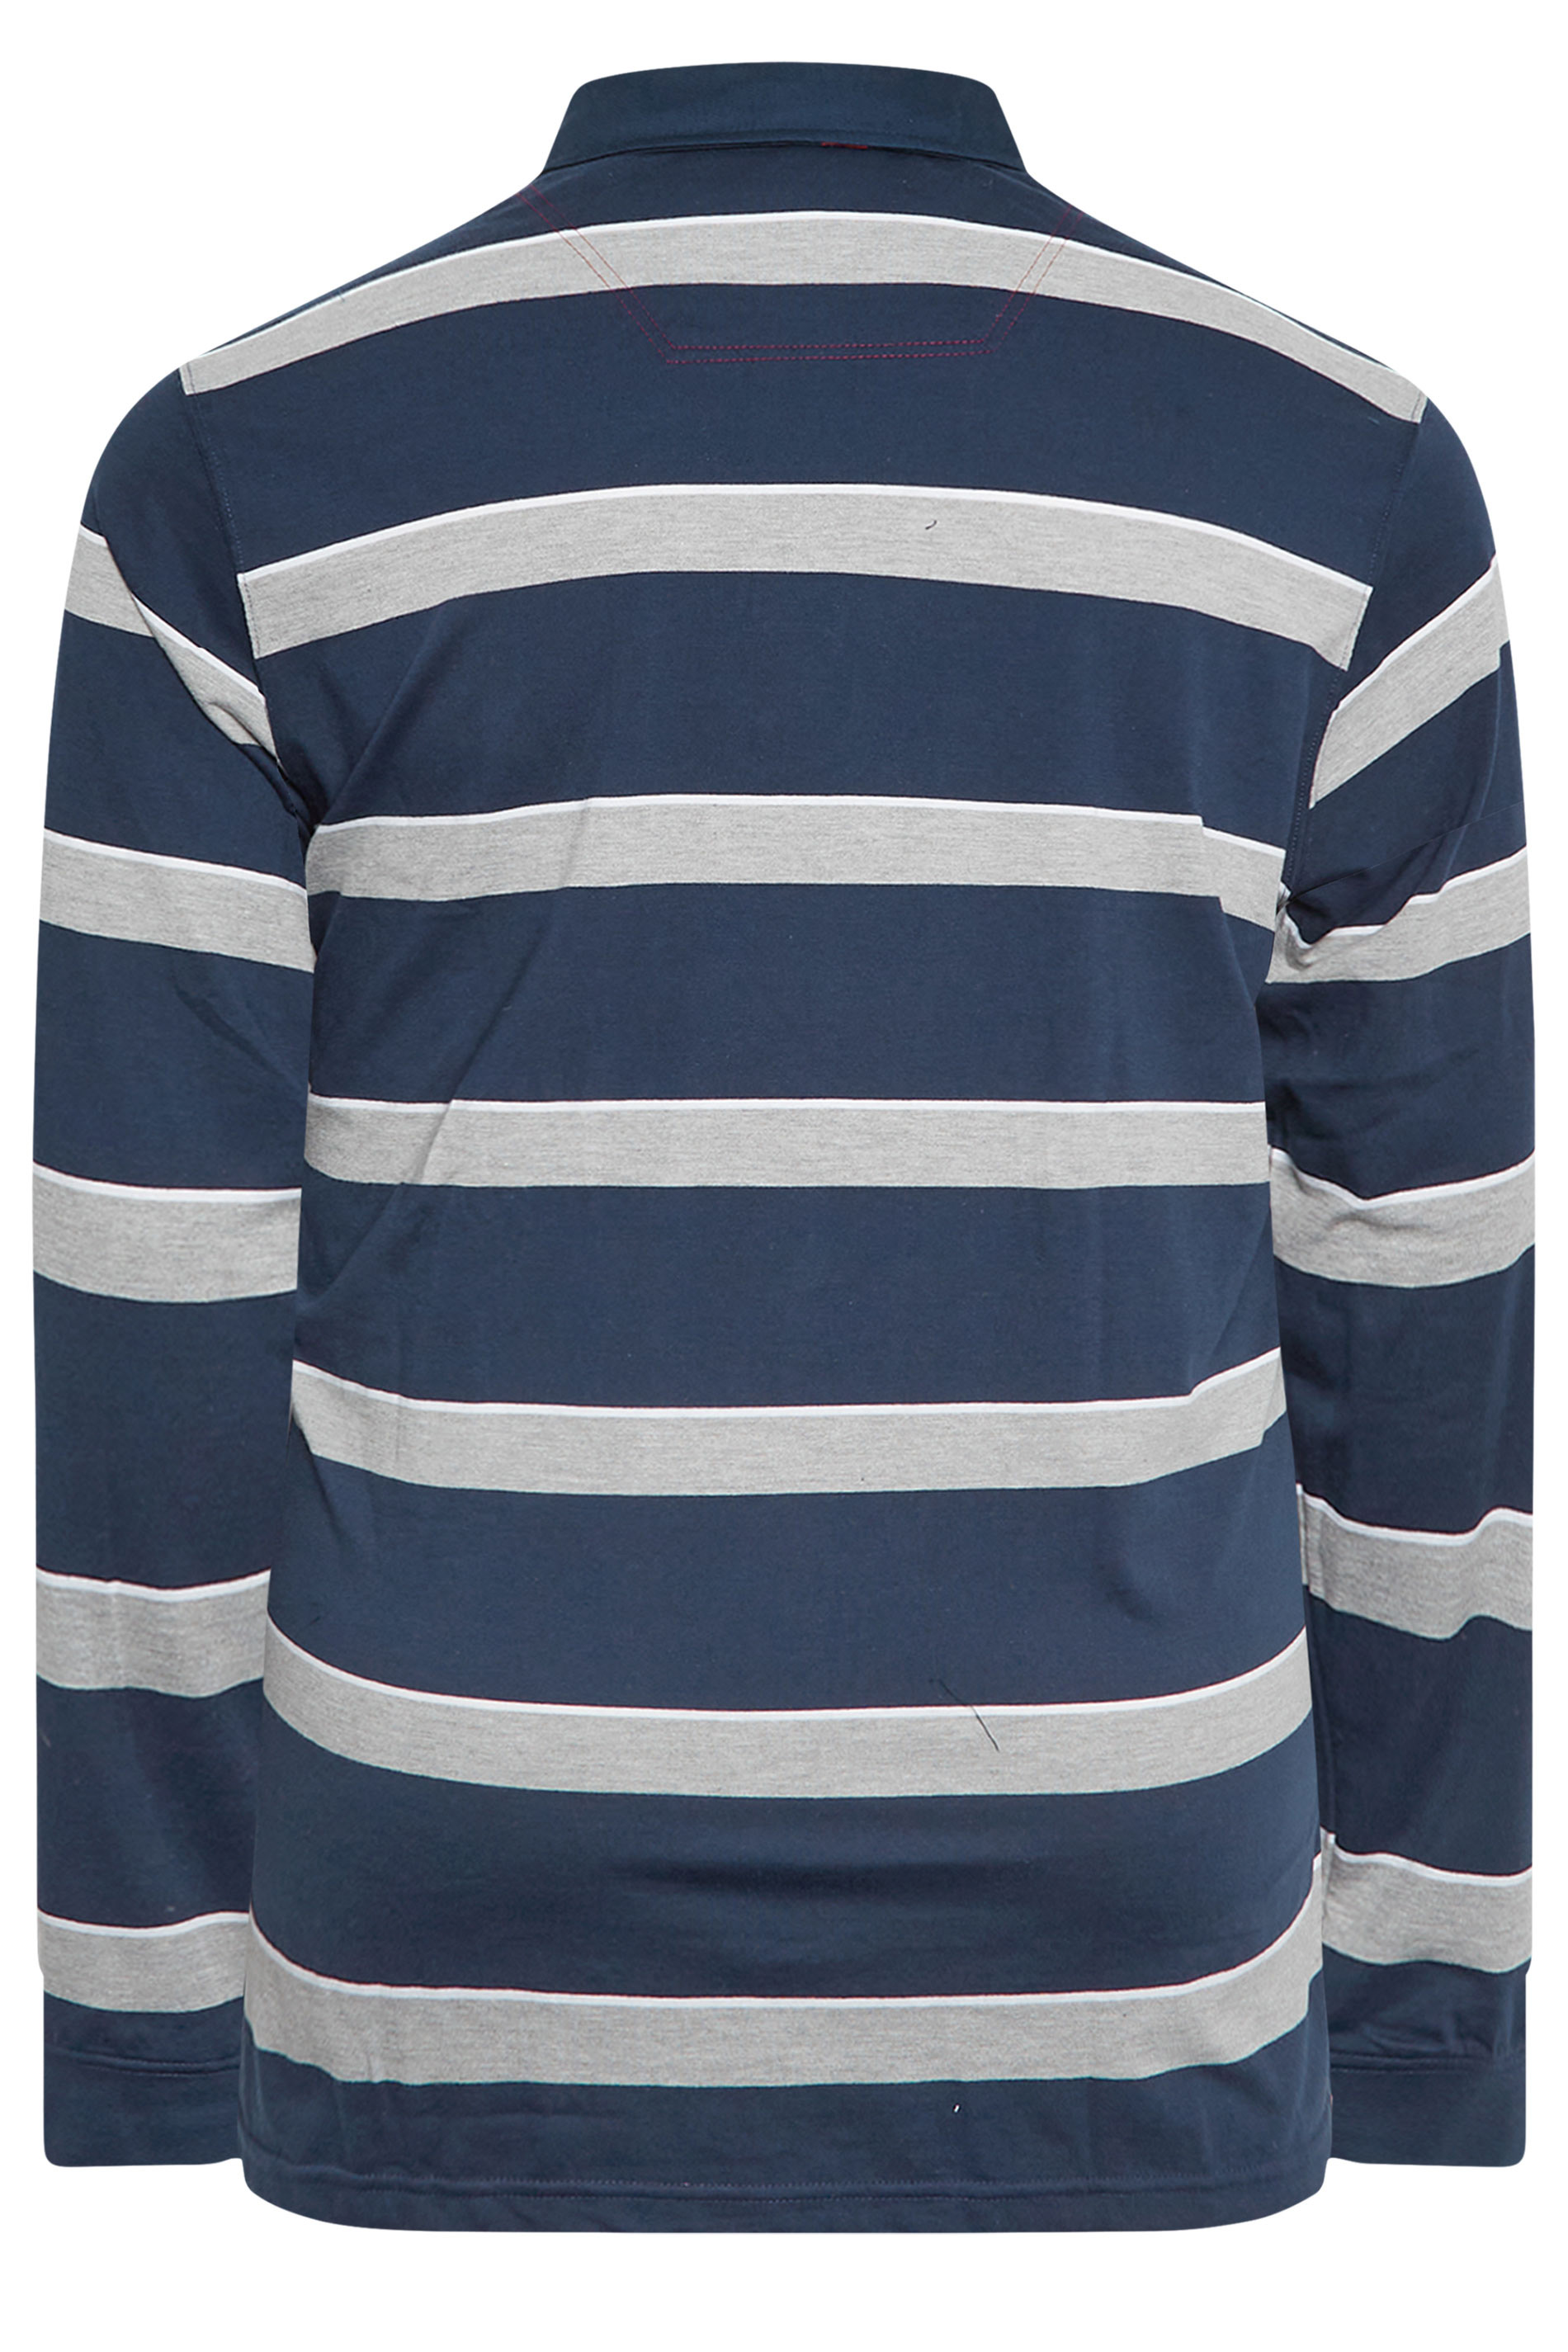 D555 Big & Tall Navy Blue Stripe Rugby Style Shirt | BadRhino 2